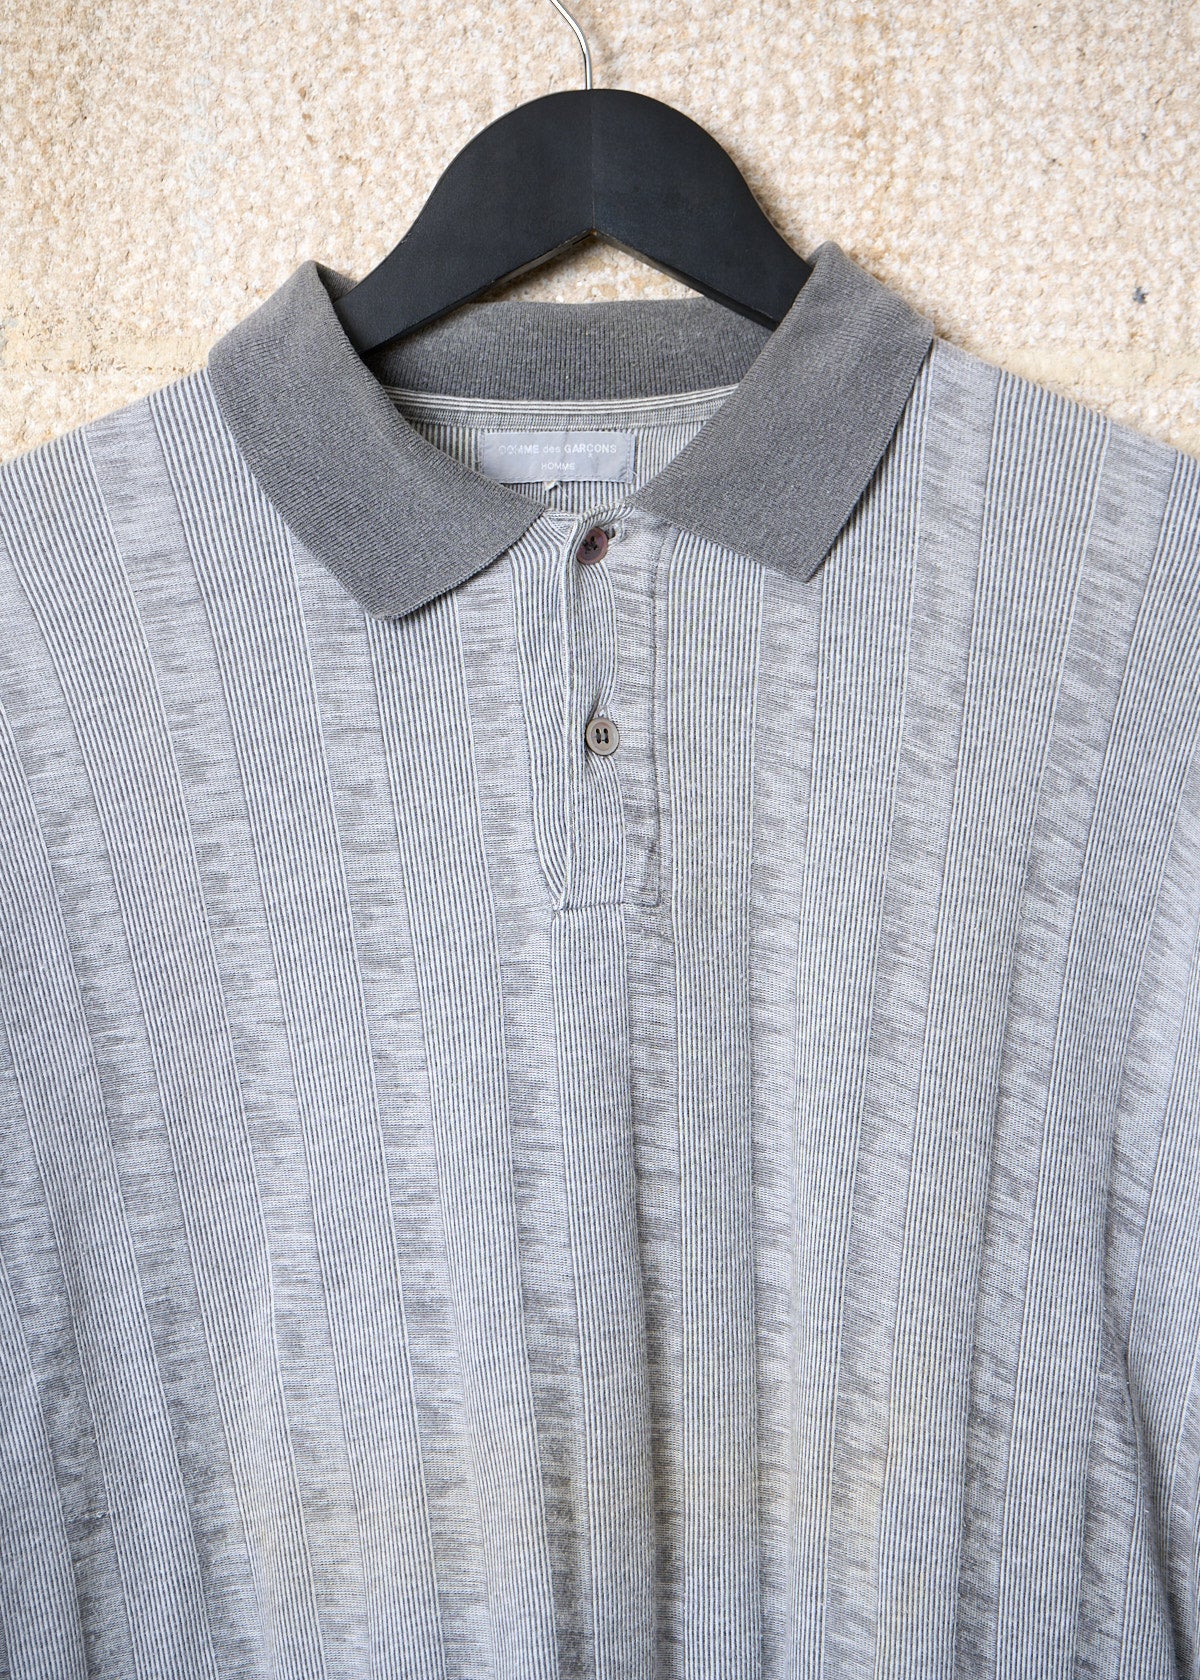 CDG Homme Grey Striped Cotton Polo 1990's - Medium